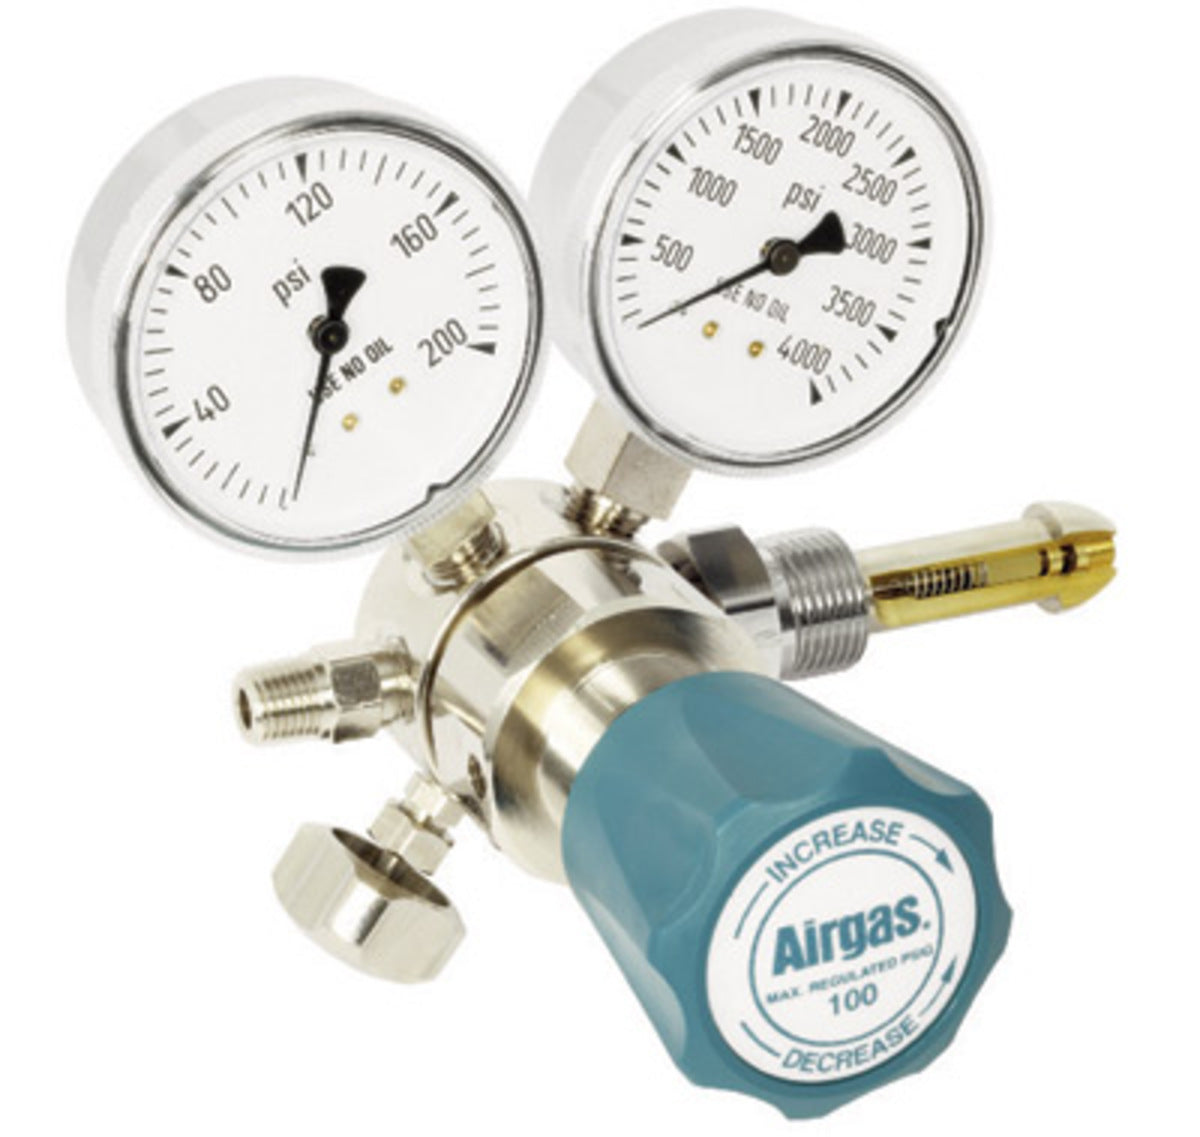 Airgas Two Stage Brass 0-100 psi General Purpose Cylinder Regulator CGA-590